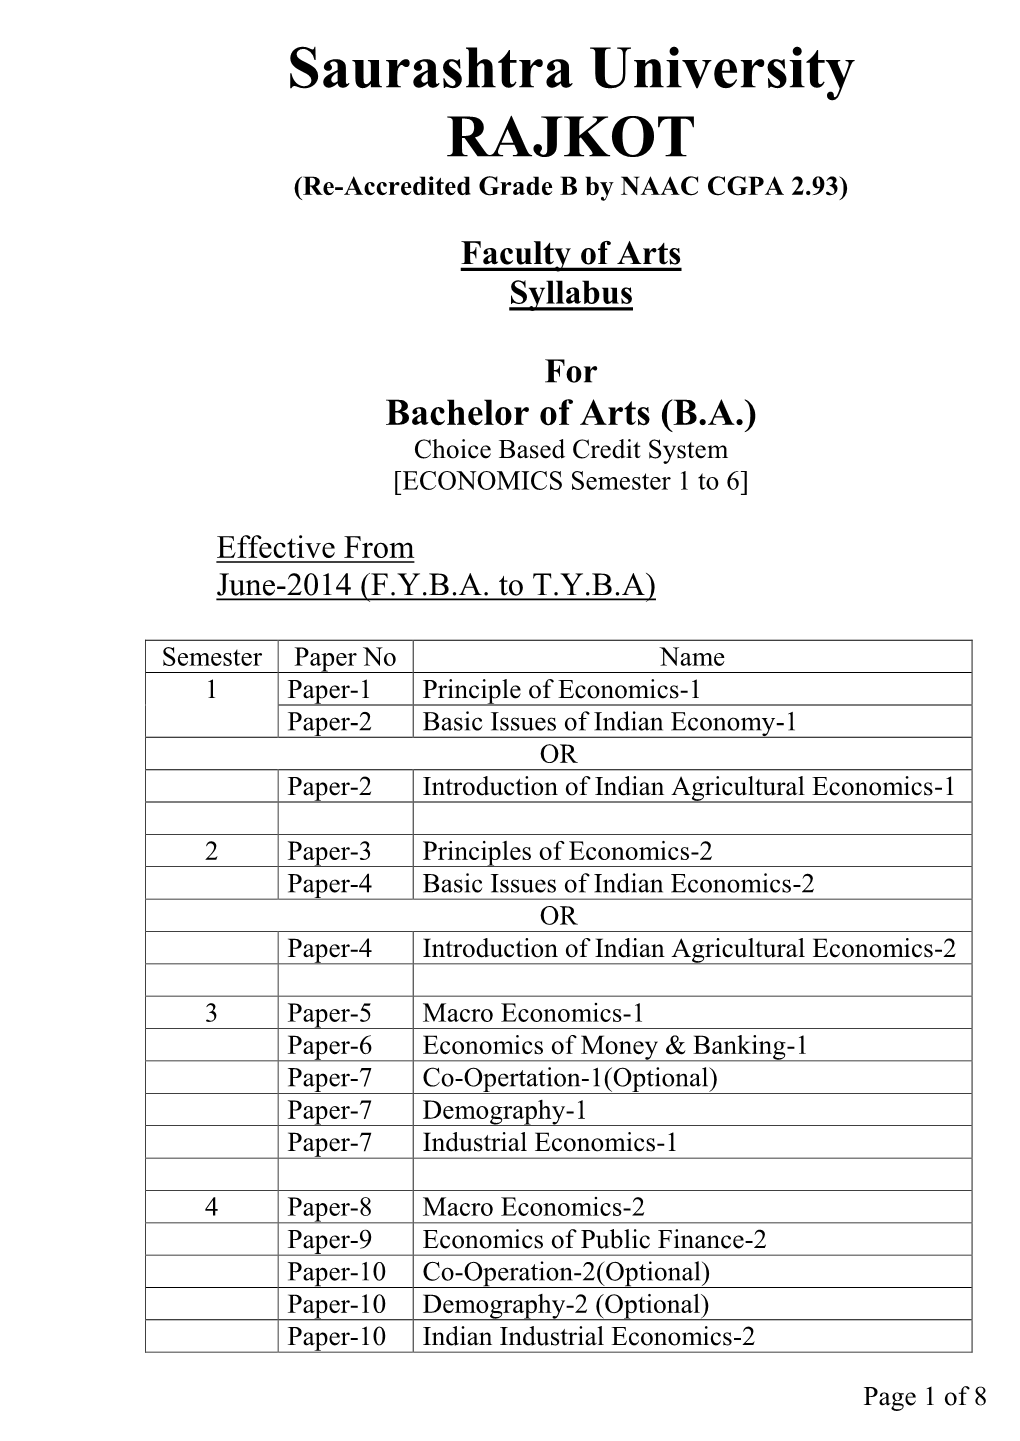 Saurashtra University RAJKOT (Re-Accredited Grade B by NAAC CGPA 2.93)